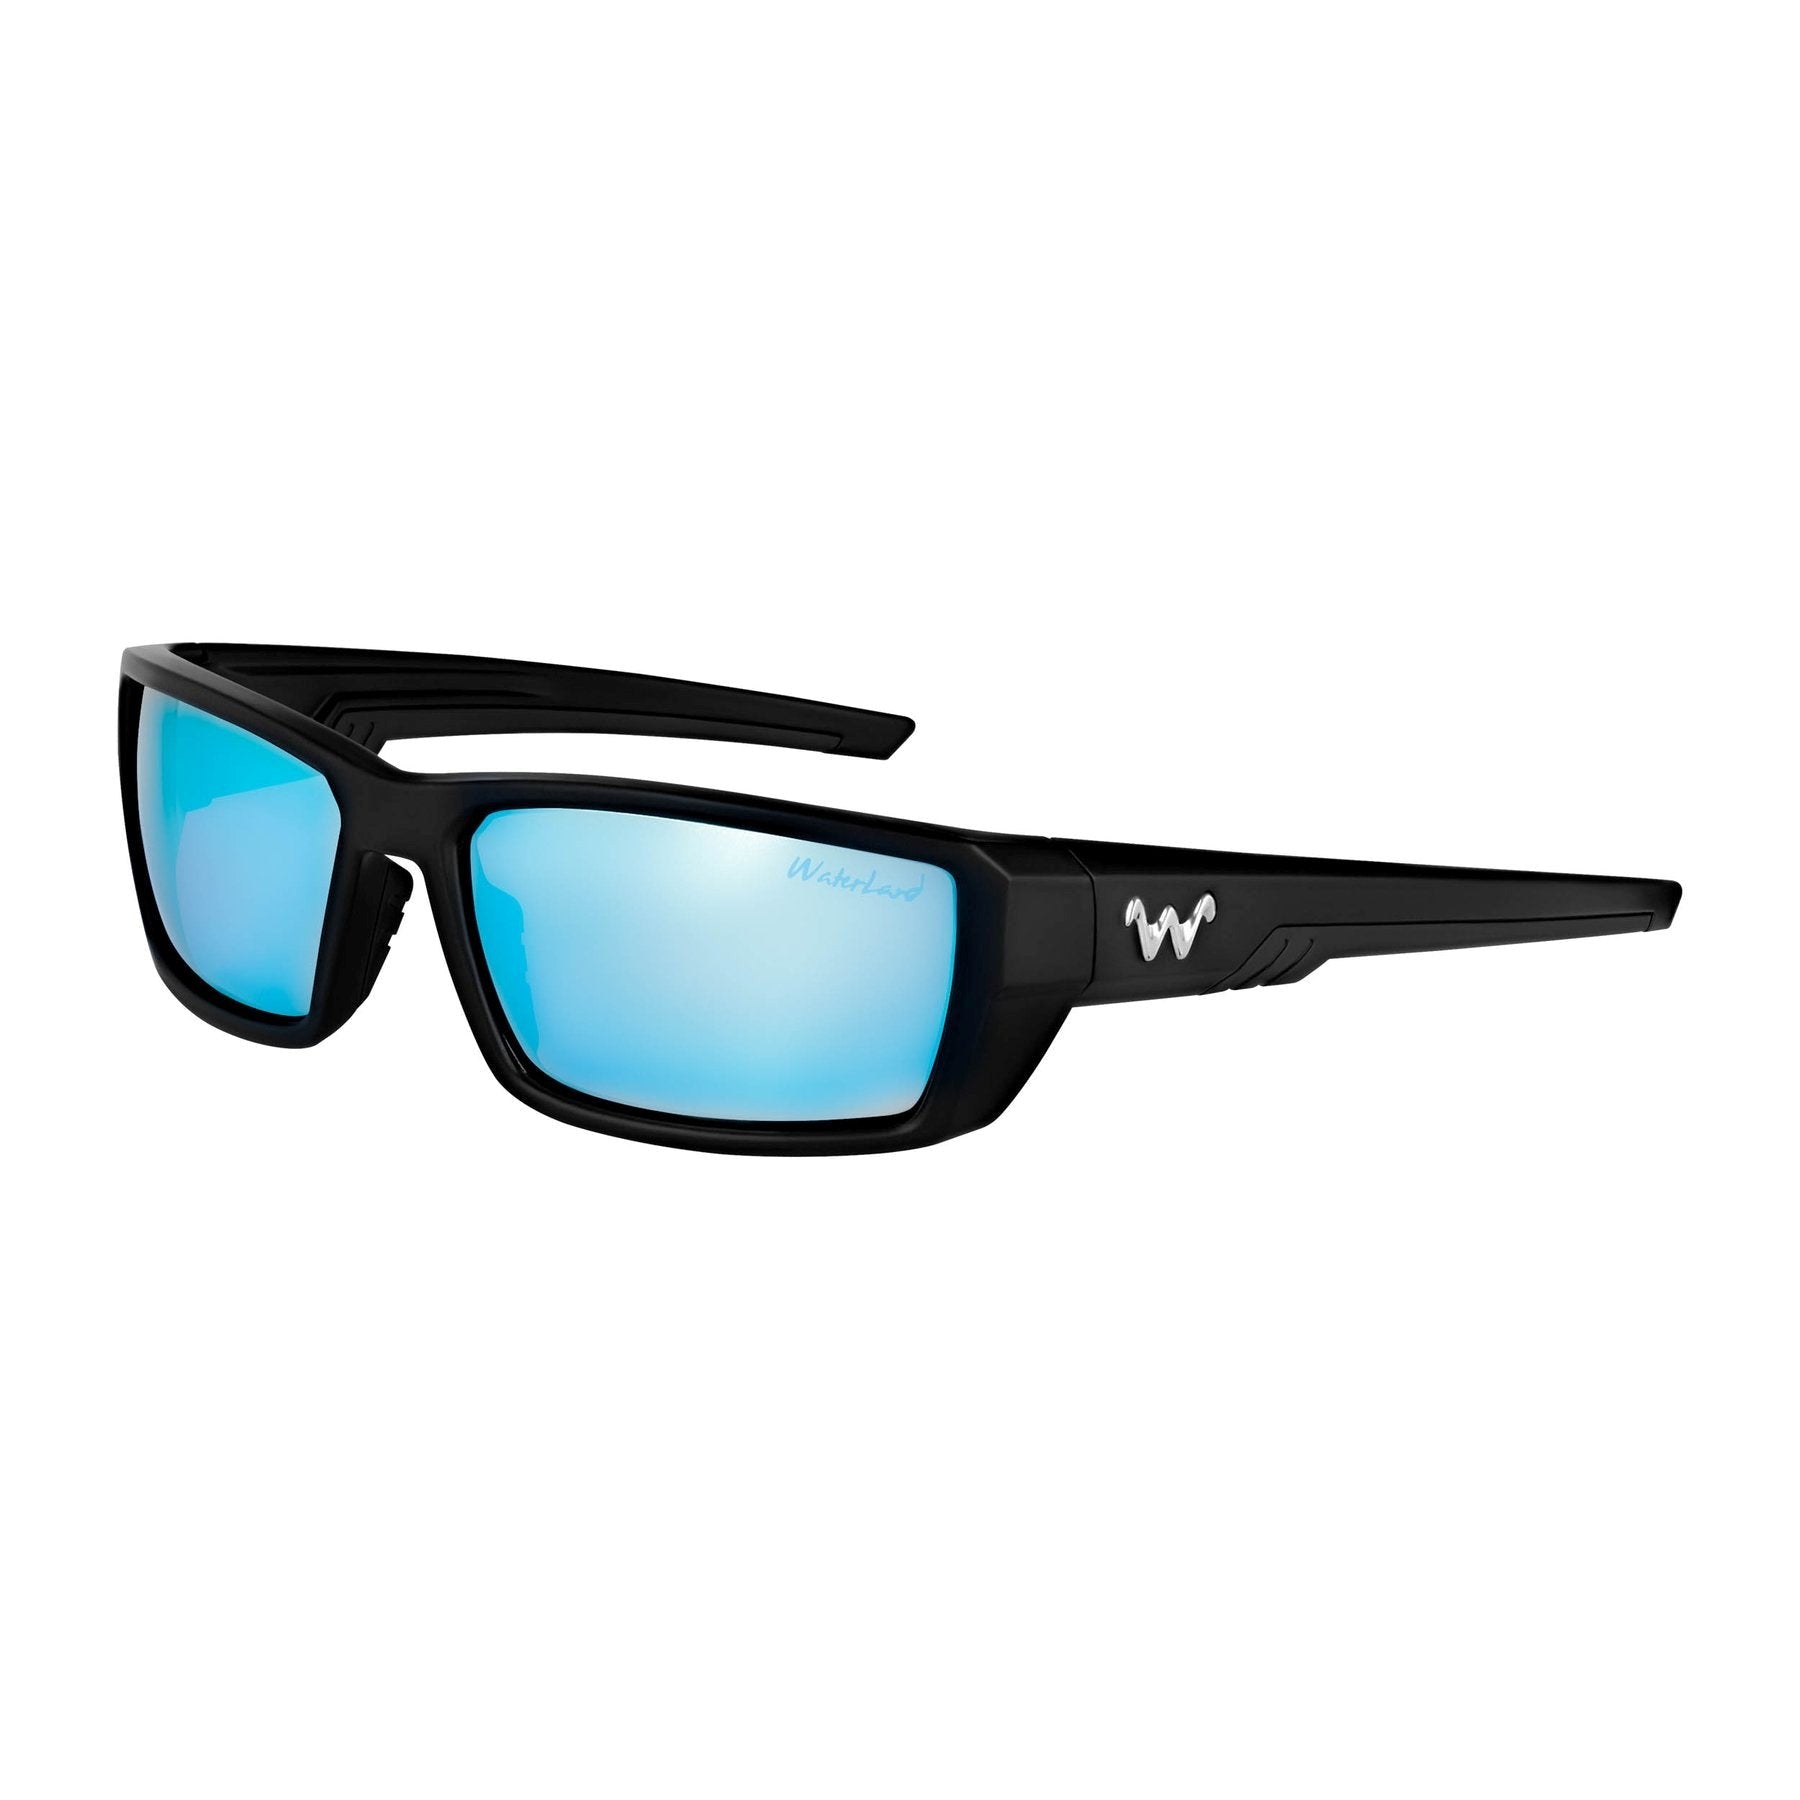 Waterland Ashor Sunglasses Black/Blue Mirror